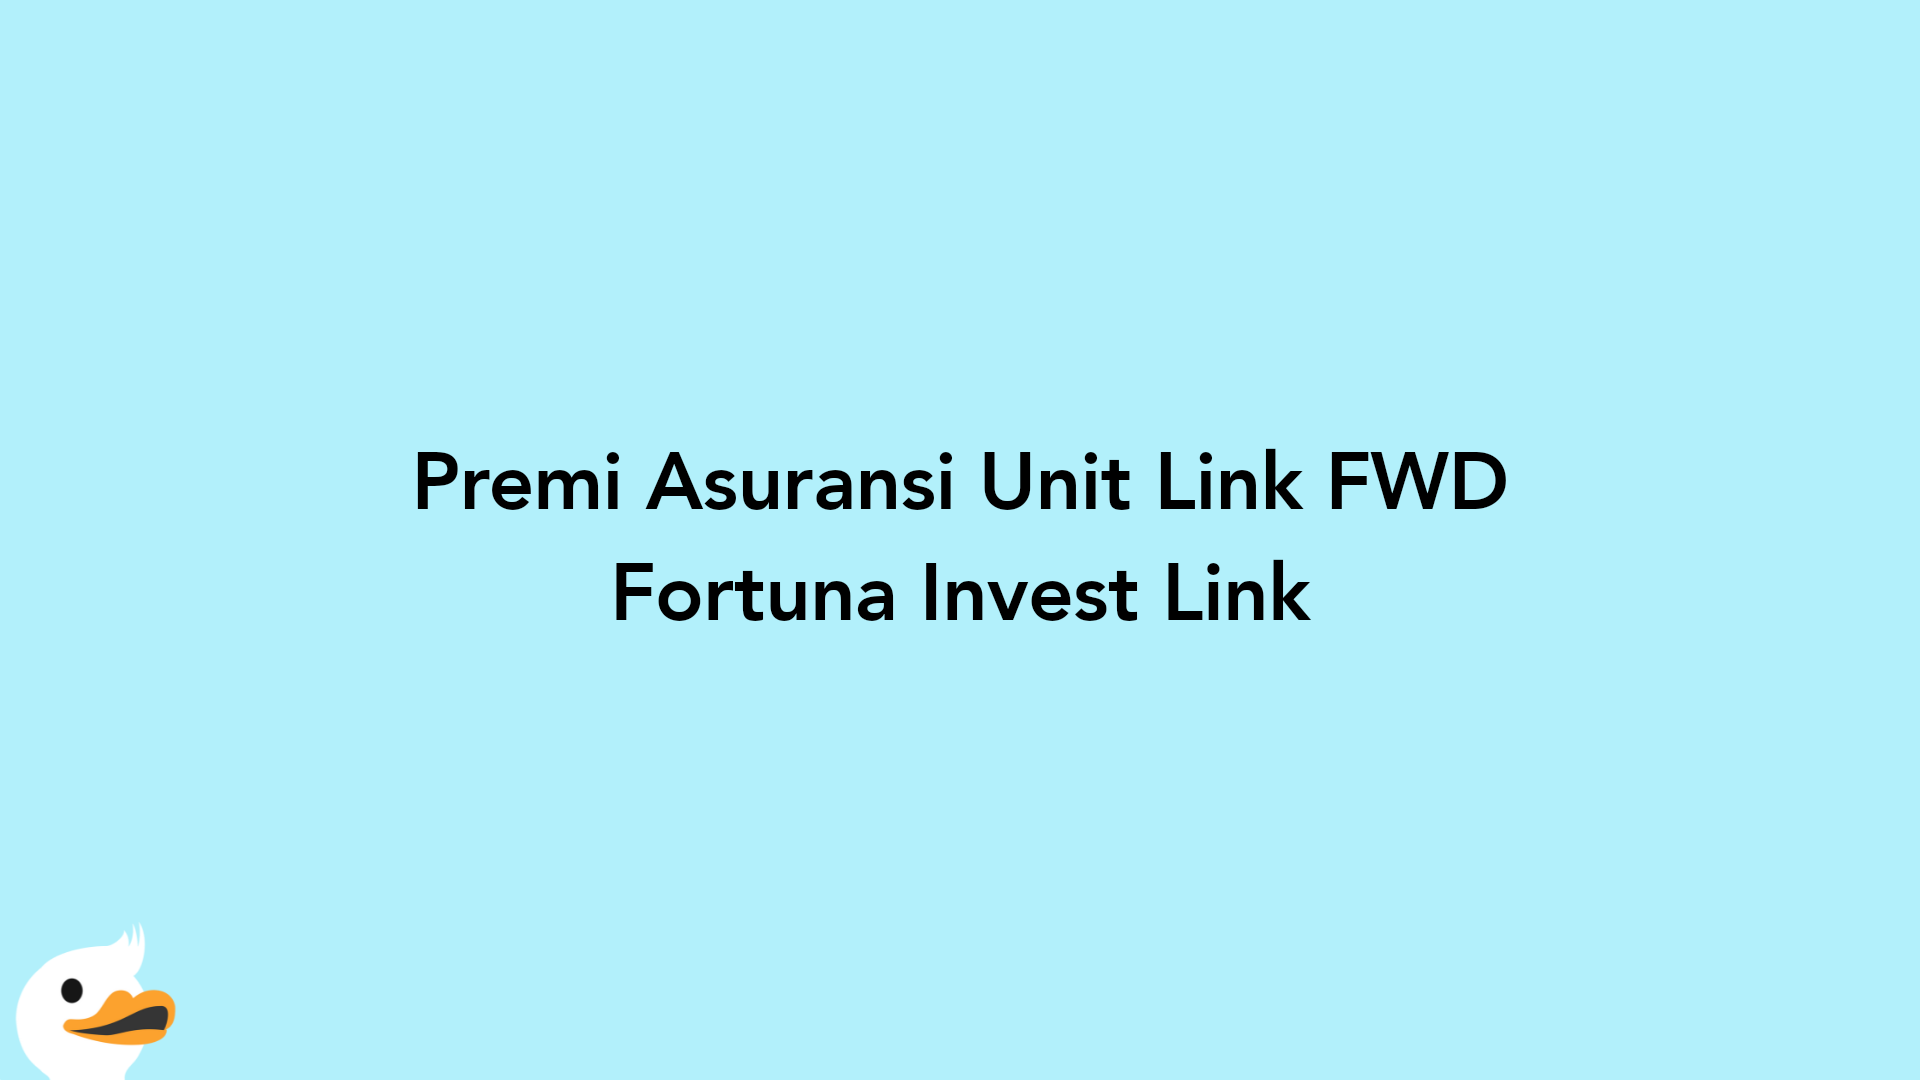 Premi Asuransi Unit Link FWD Fortuna Invest Link